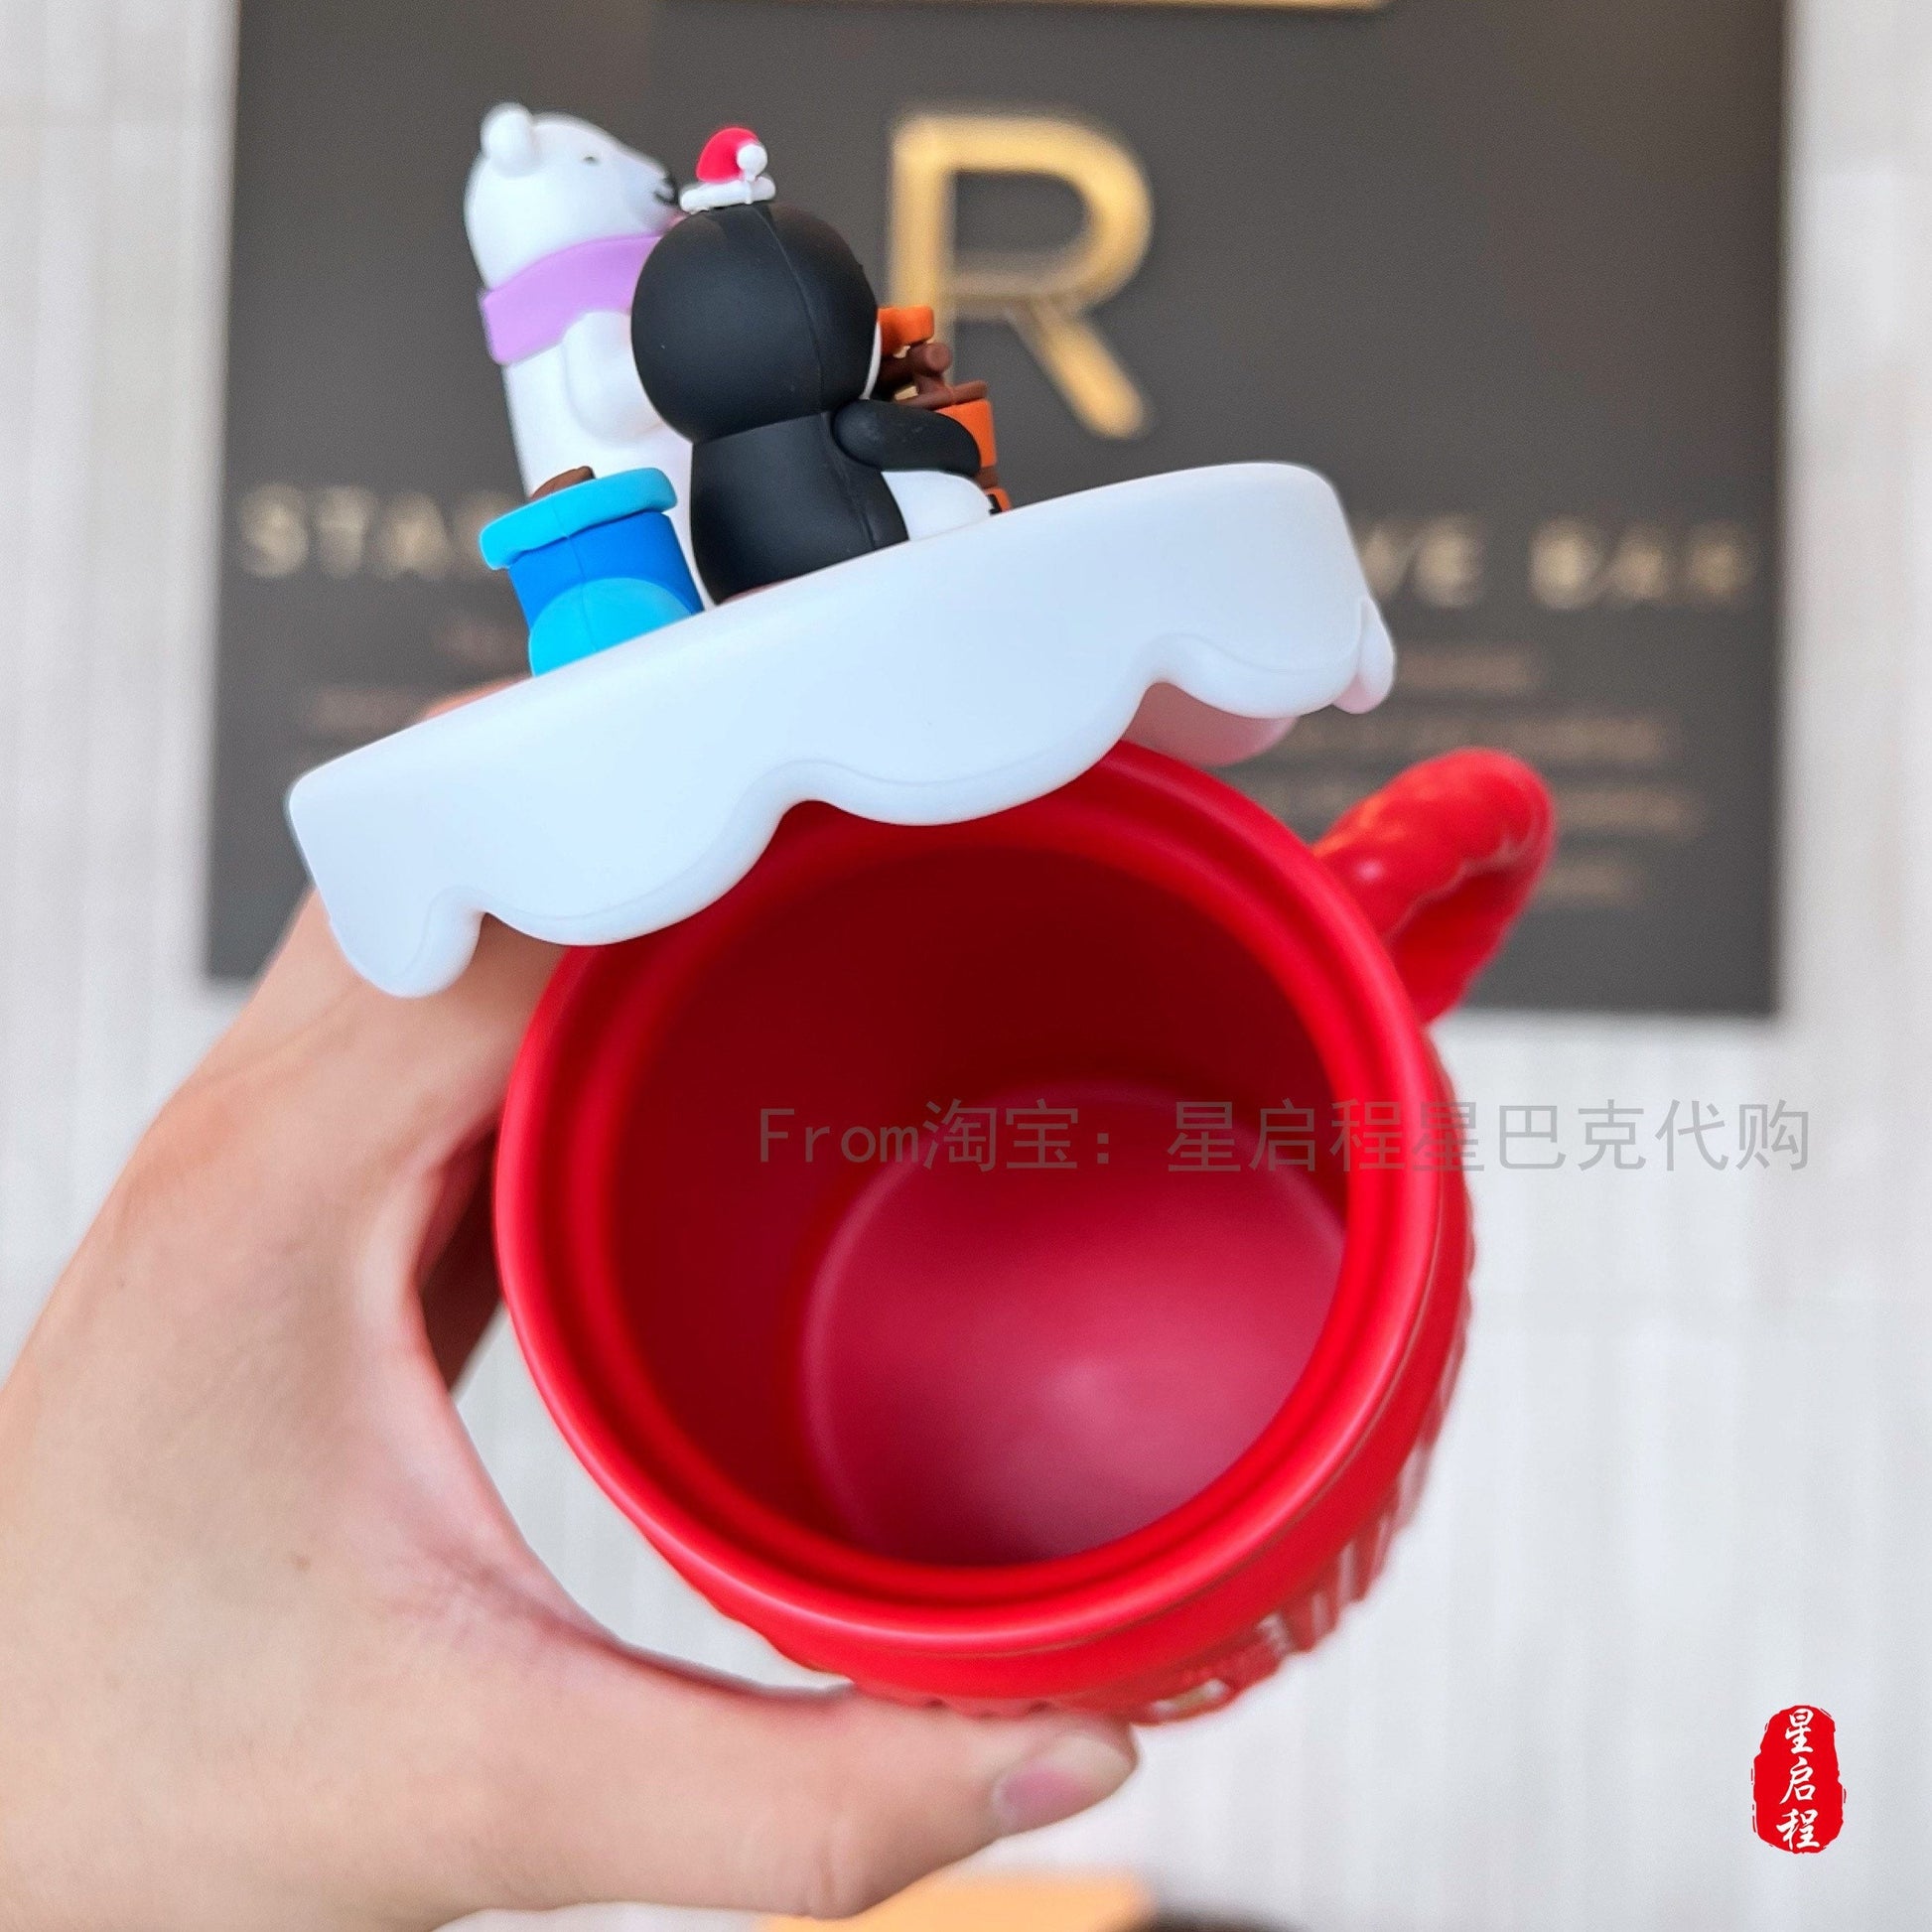 Starbucks China - Christmas Time 2020 (Store 1st Series) - Penguin